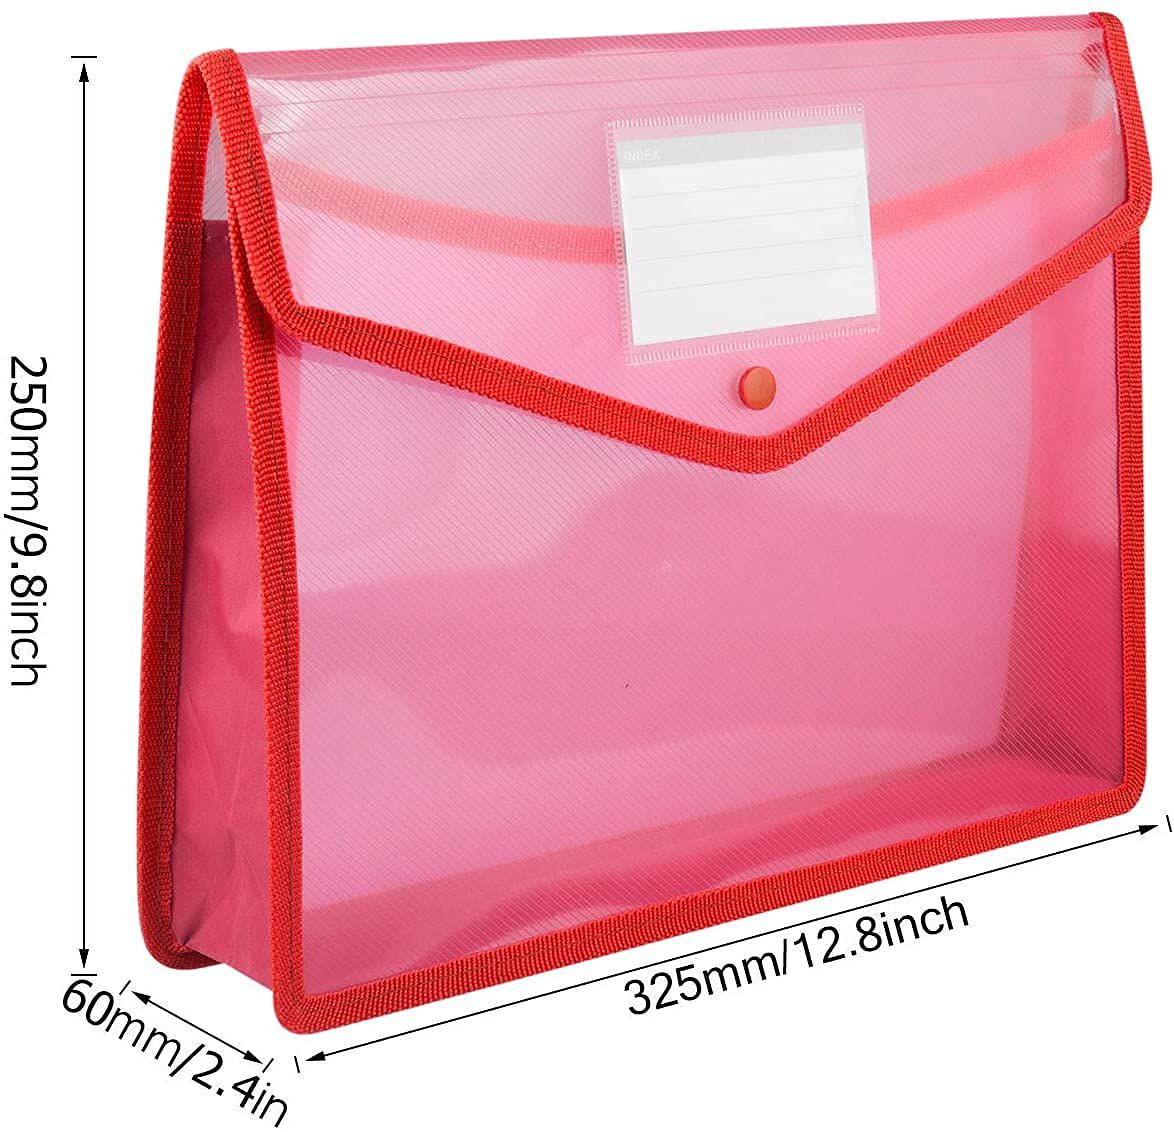     			Plastic Envelope Folder,Transparent Poly-Plastic A4 Documents File Storage Bag With Snap Button